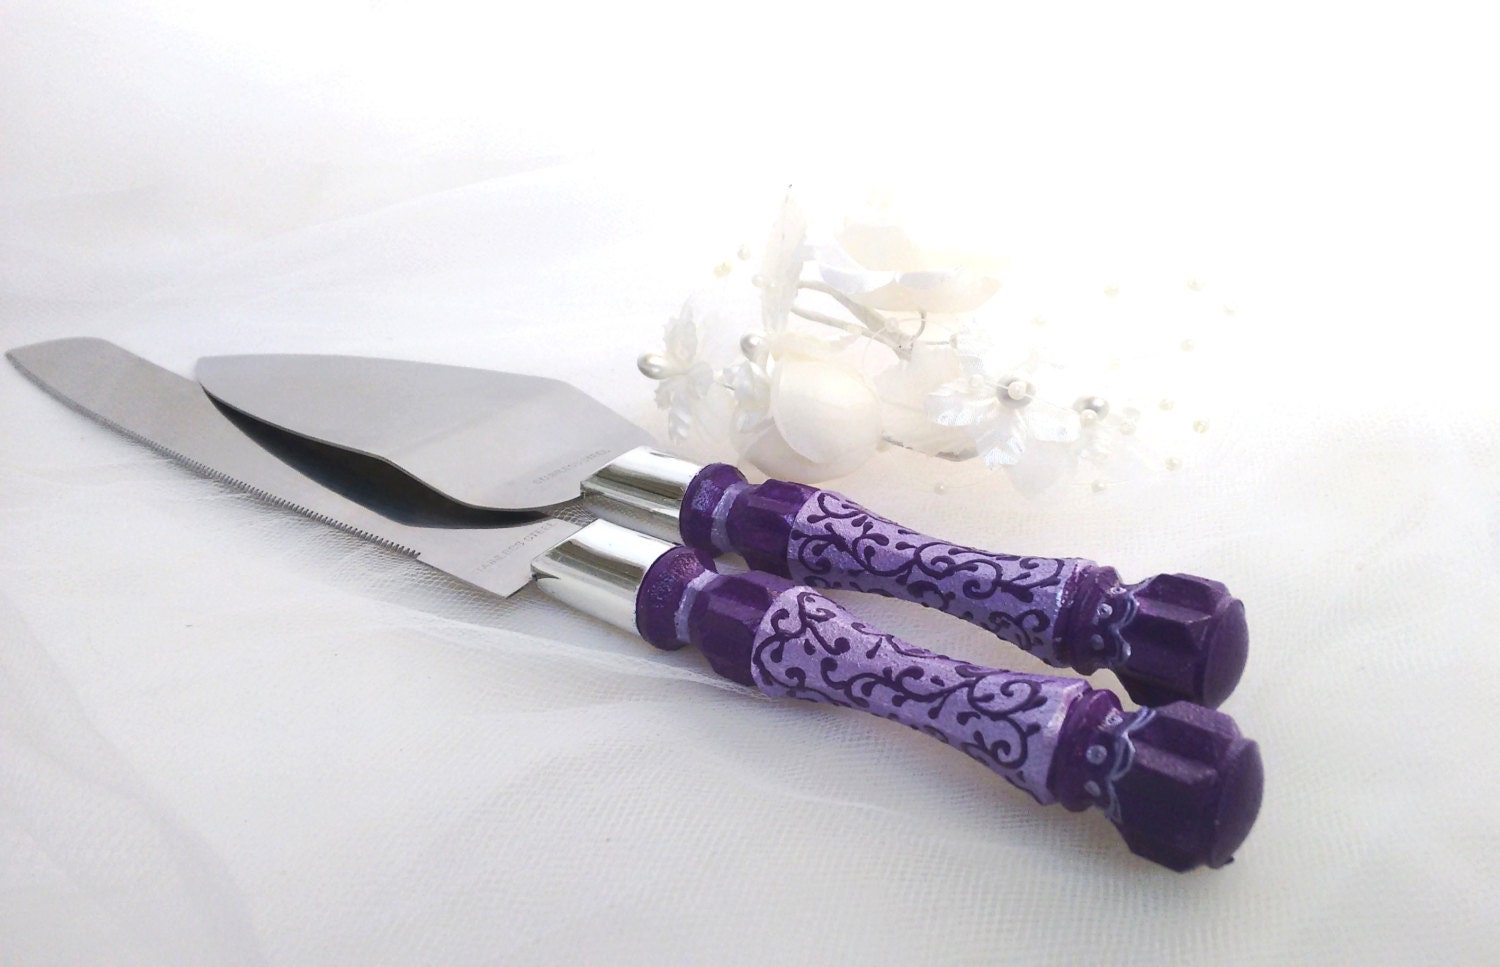  Cake  Knife  Server Set  Purple Wedding  Cake  Knife  Set  Bride